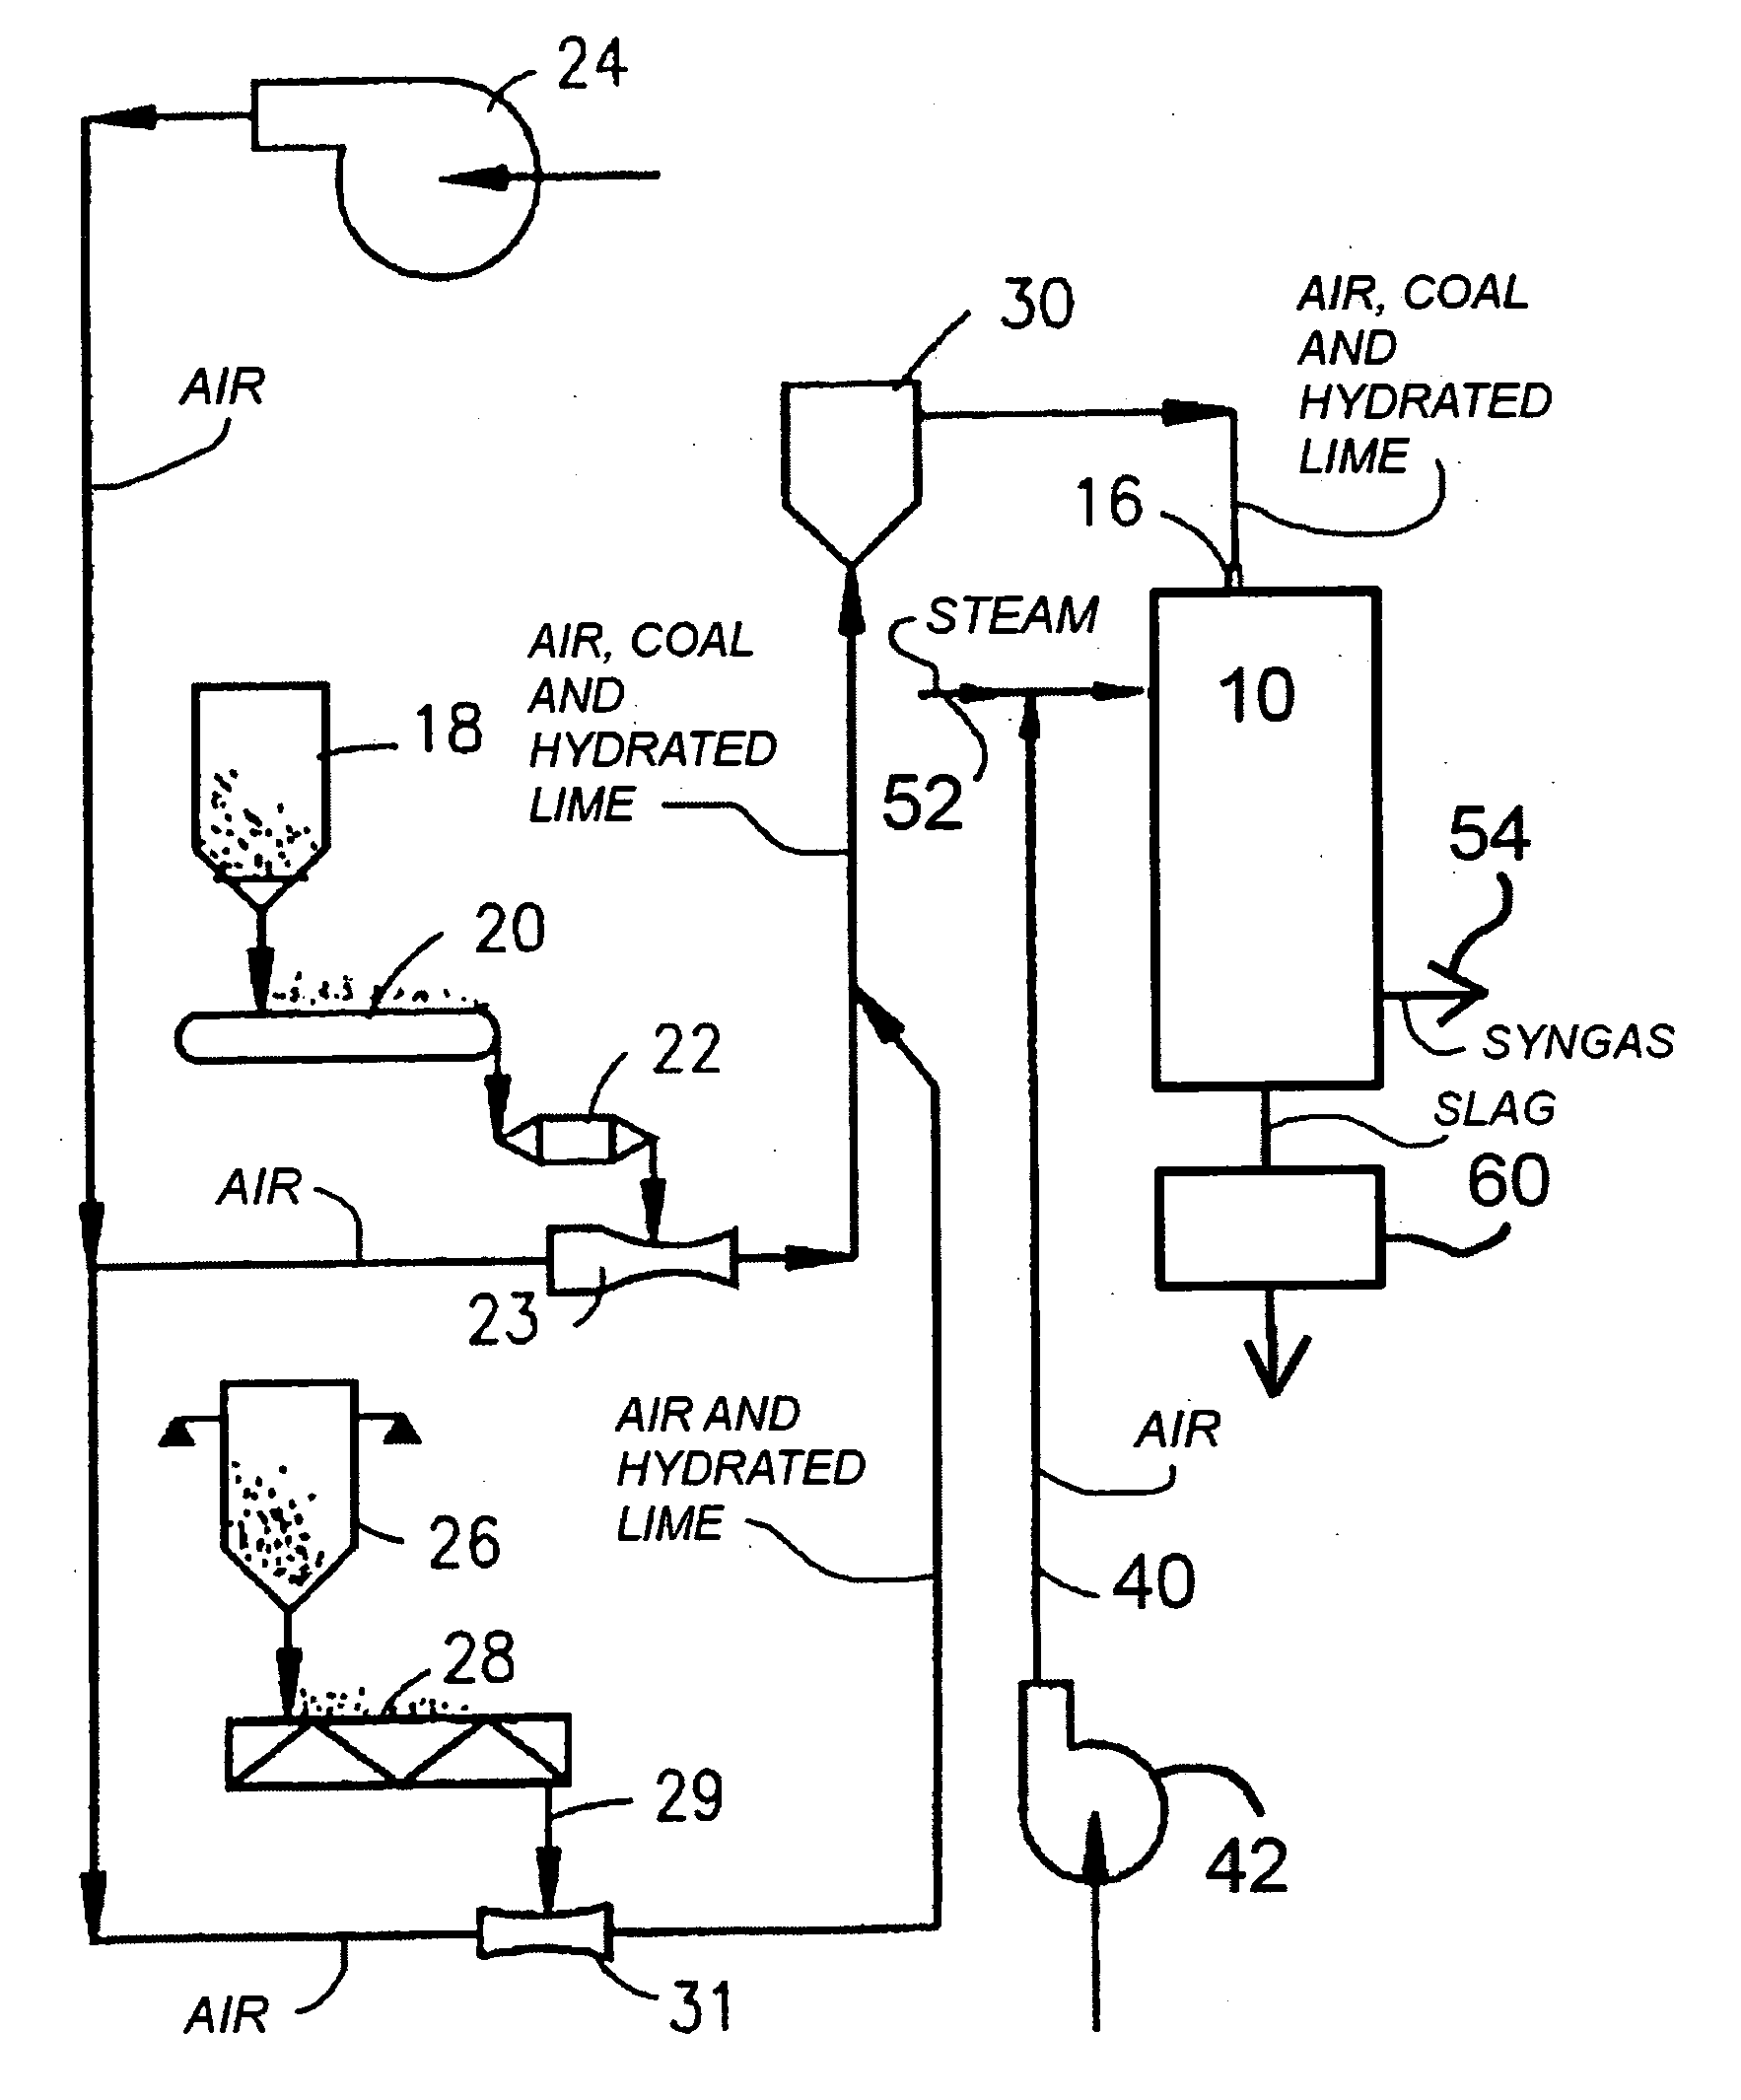 Gasification of fuel in a slagging gasifier